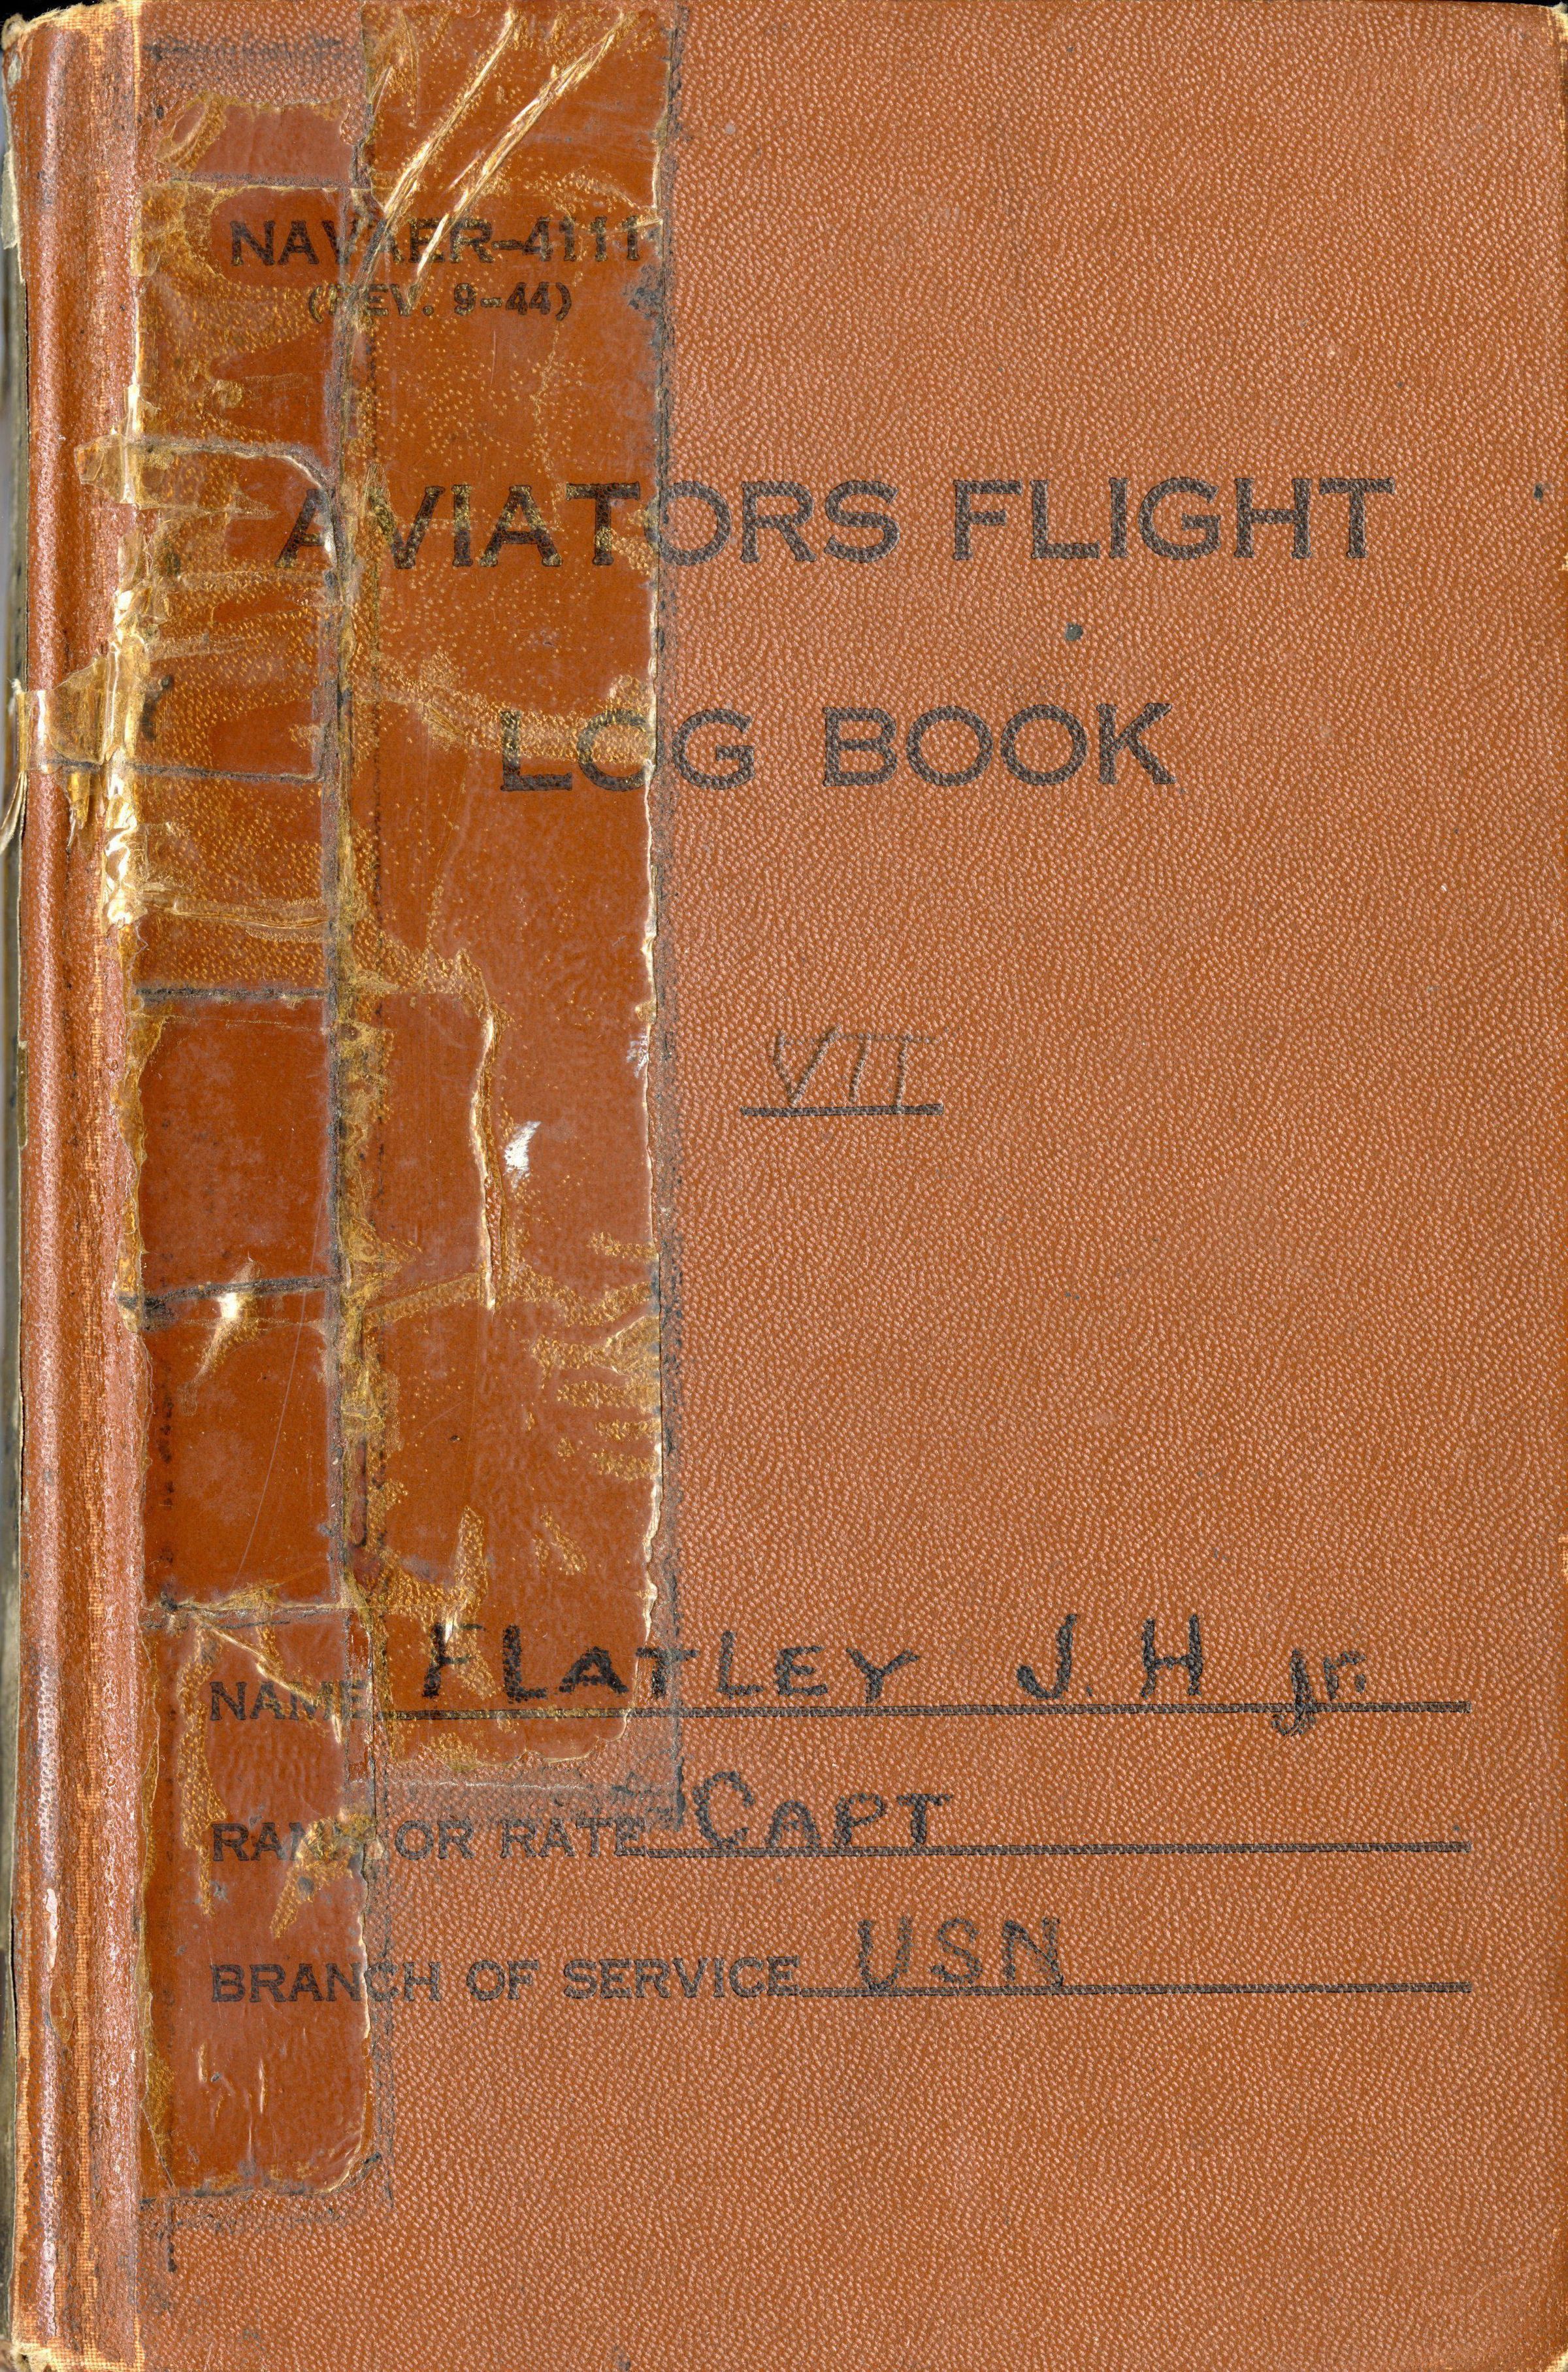 Primary Image of Aviators Flight Log Book (1948-1957) of James H. Flatley, Jr.